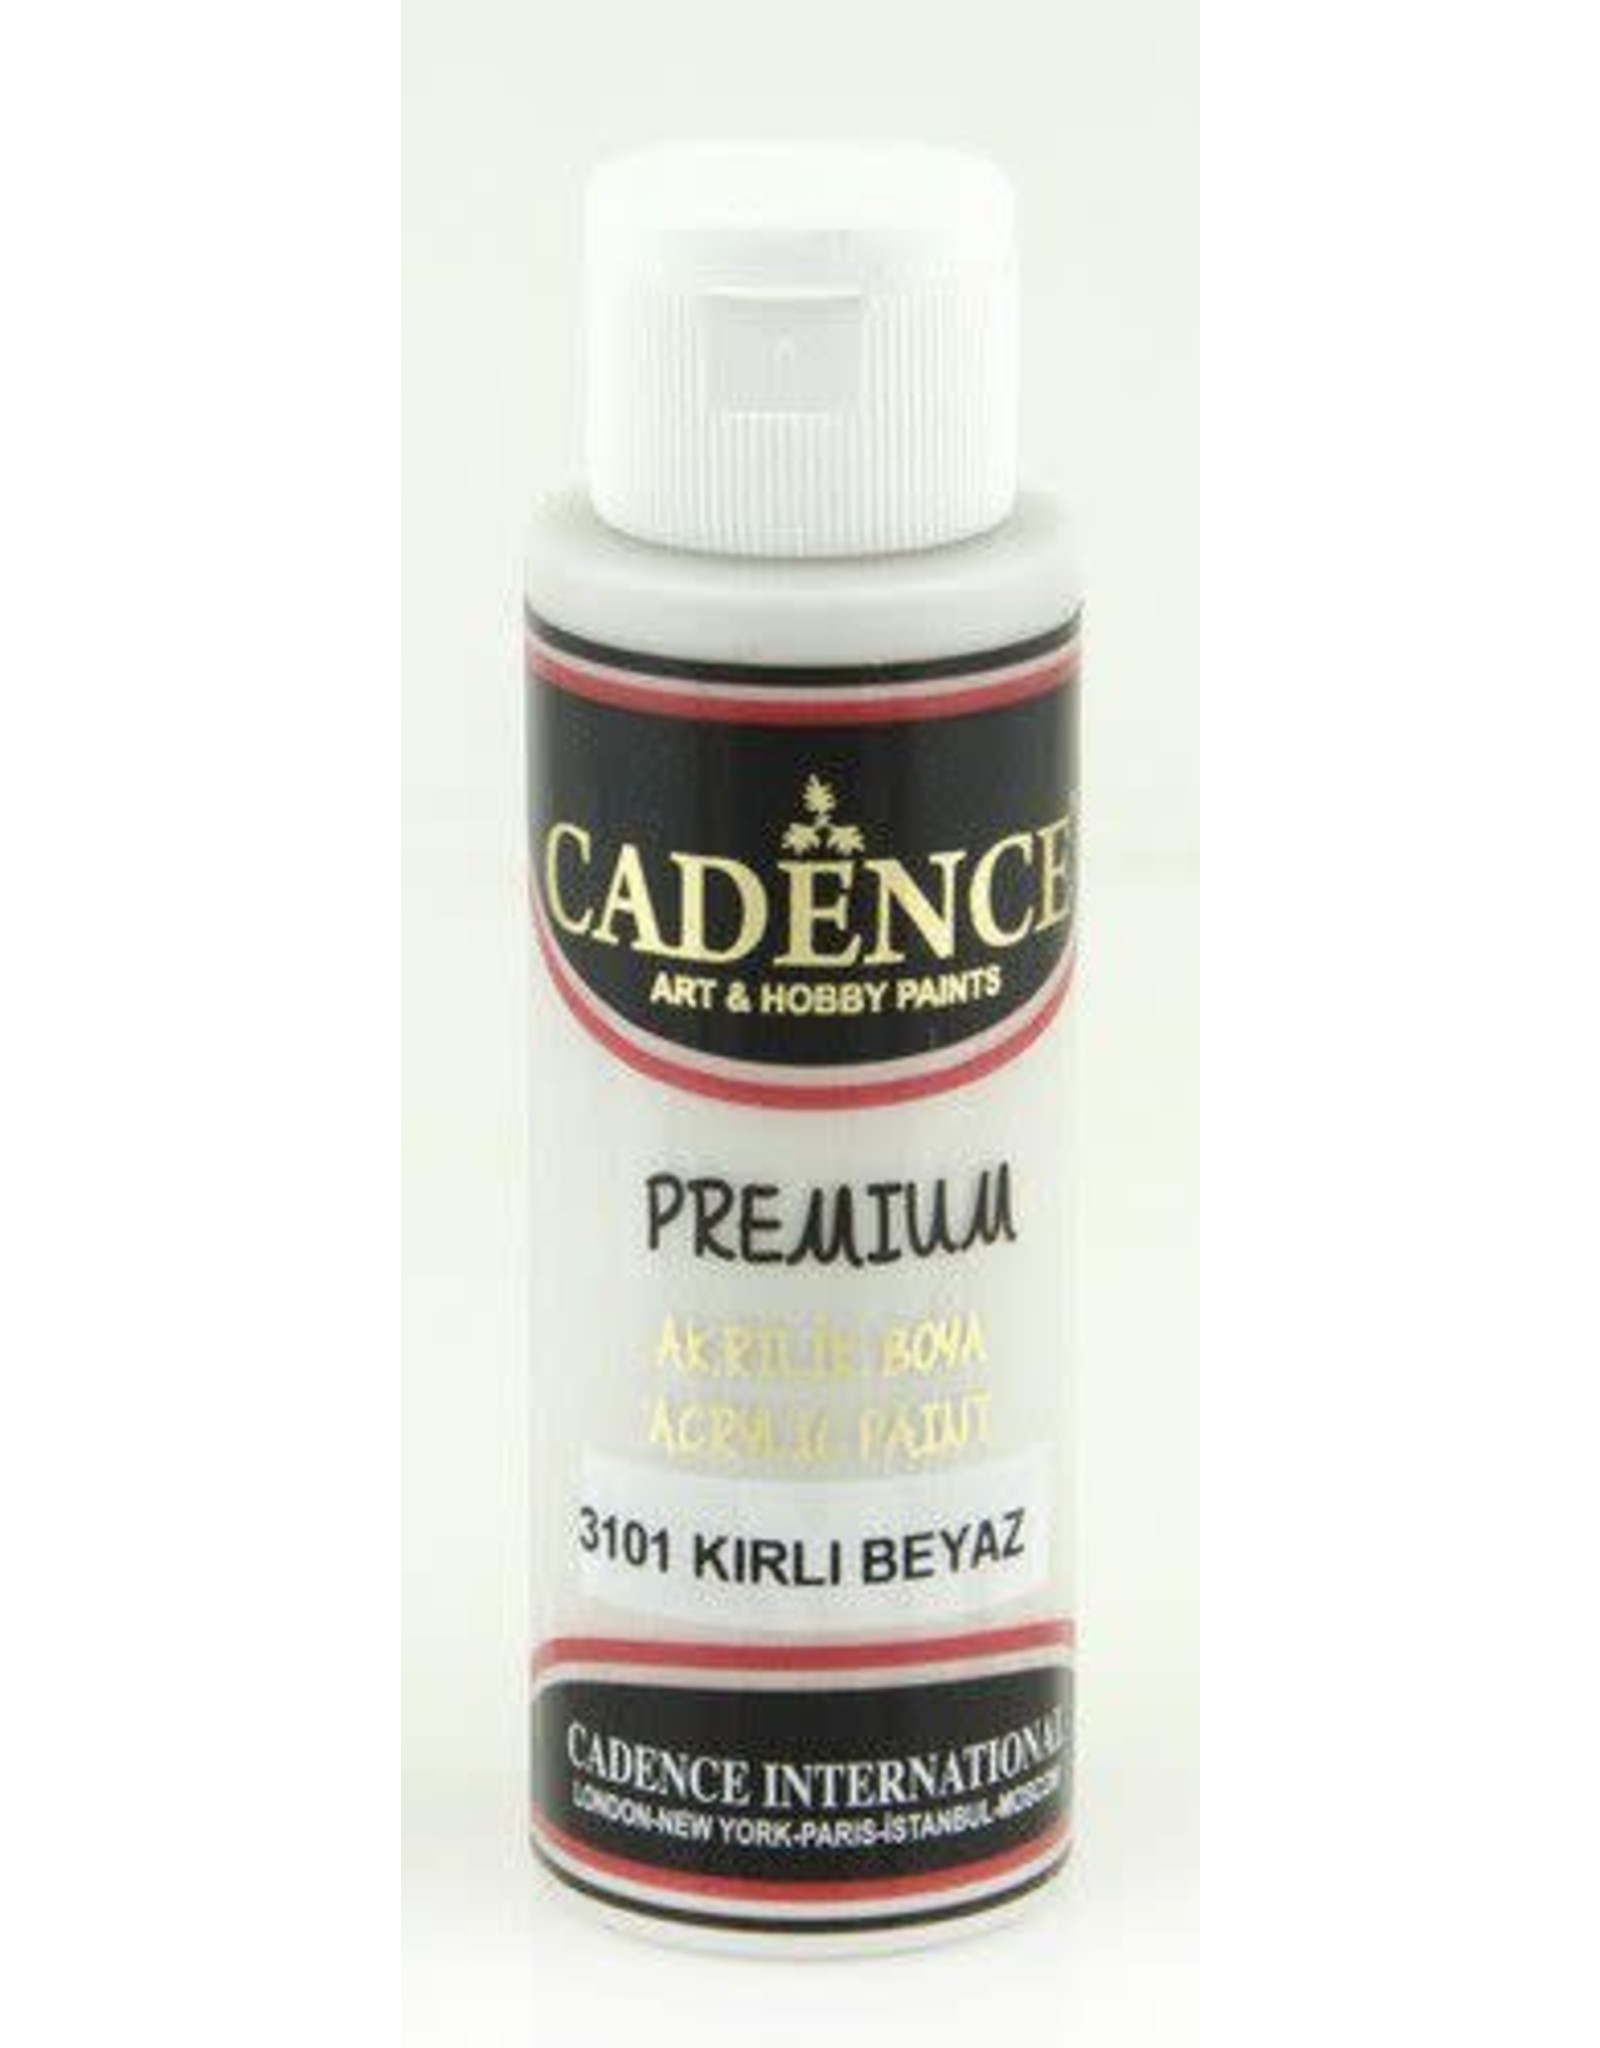 Cadence Cadence Premium acrylverf (semi mat) Dirty - wit